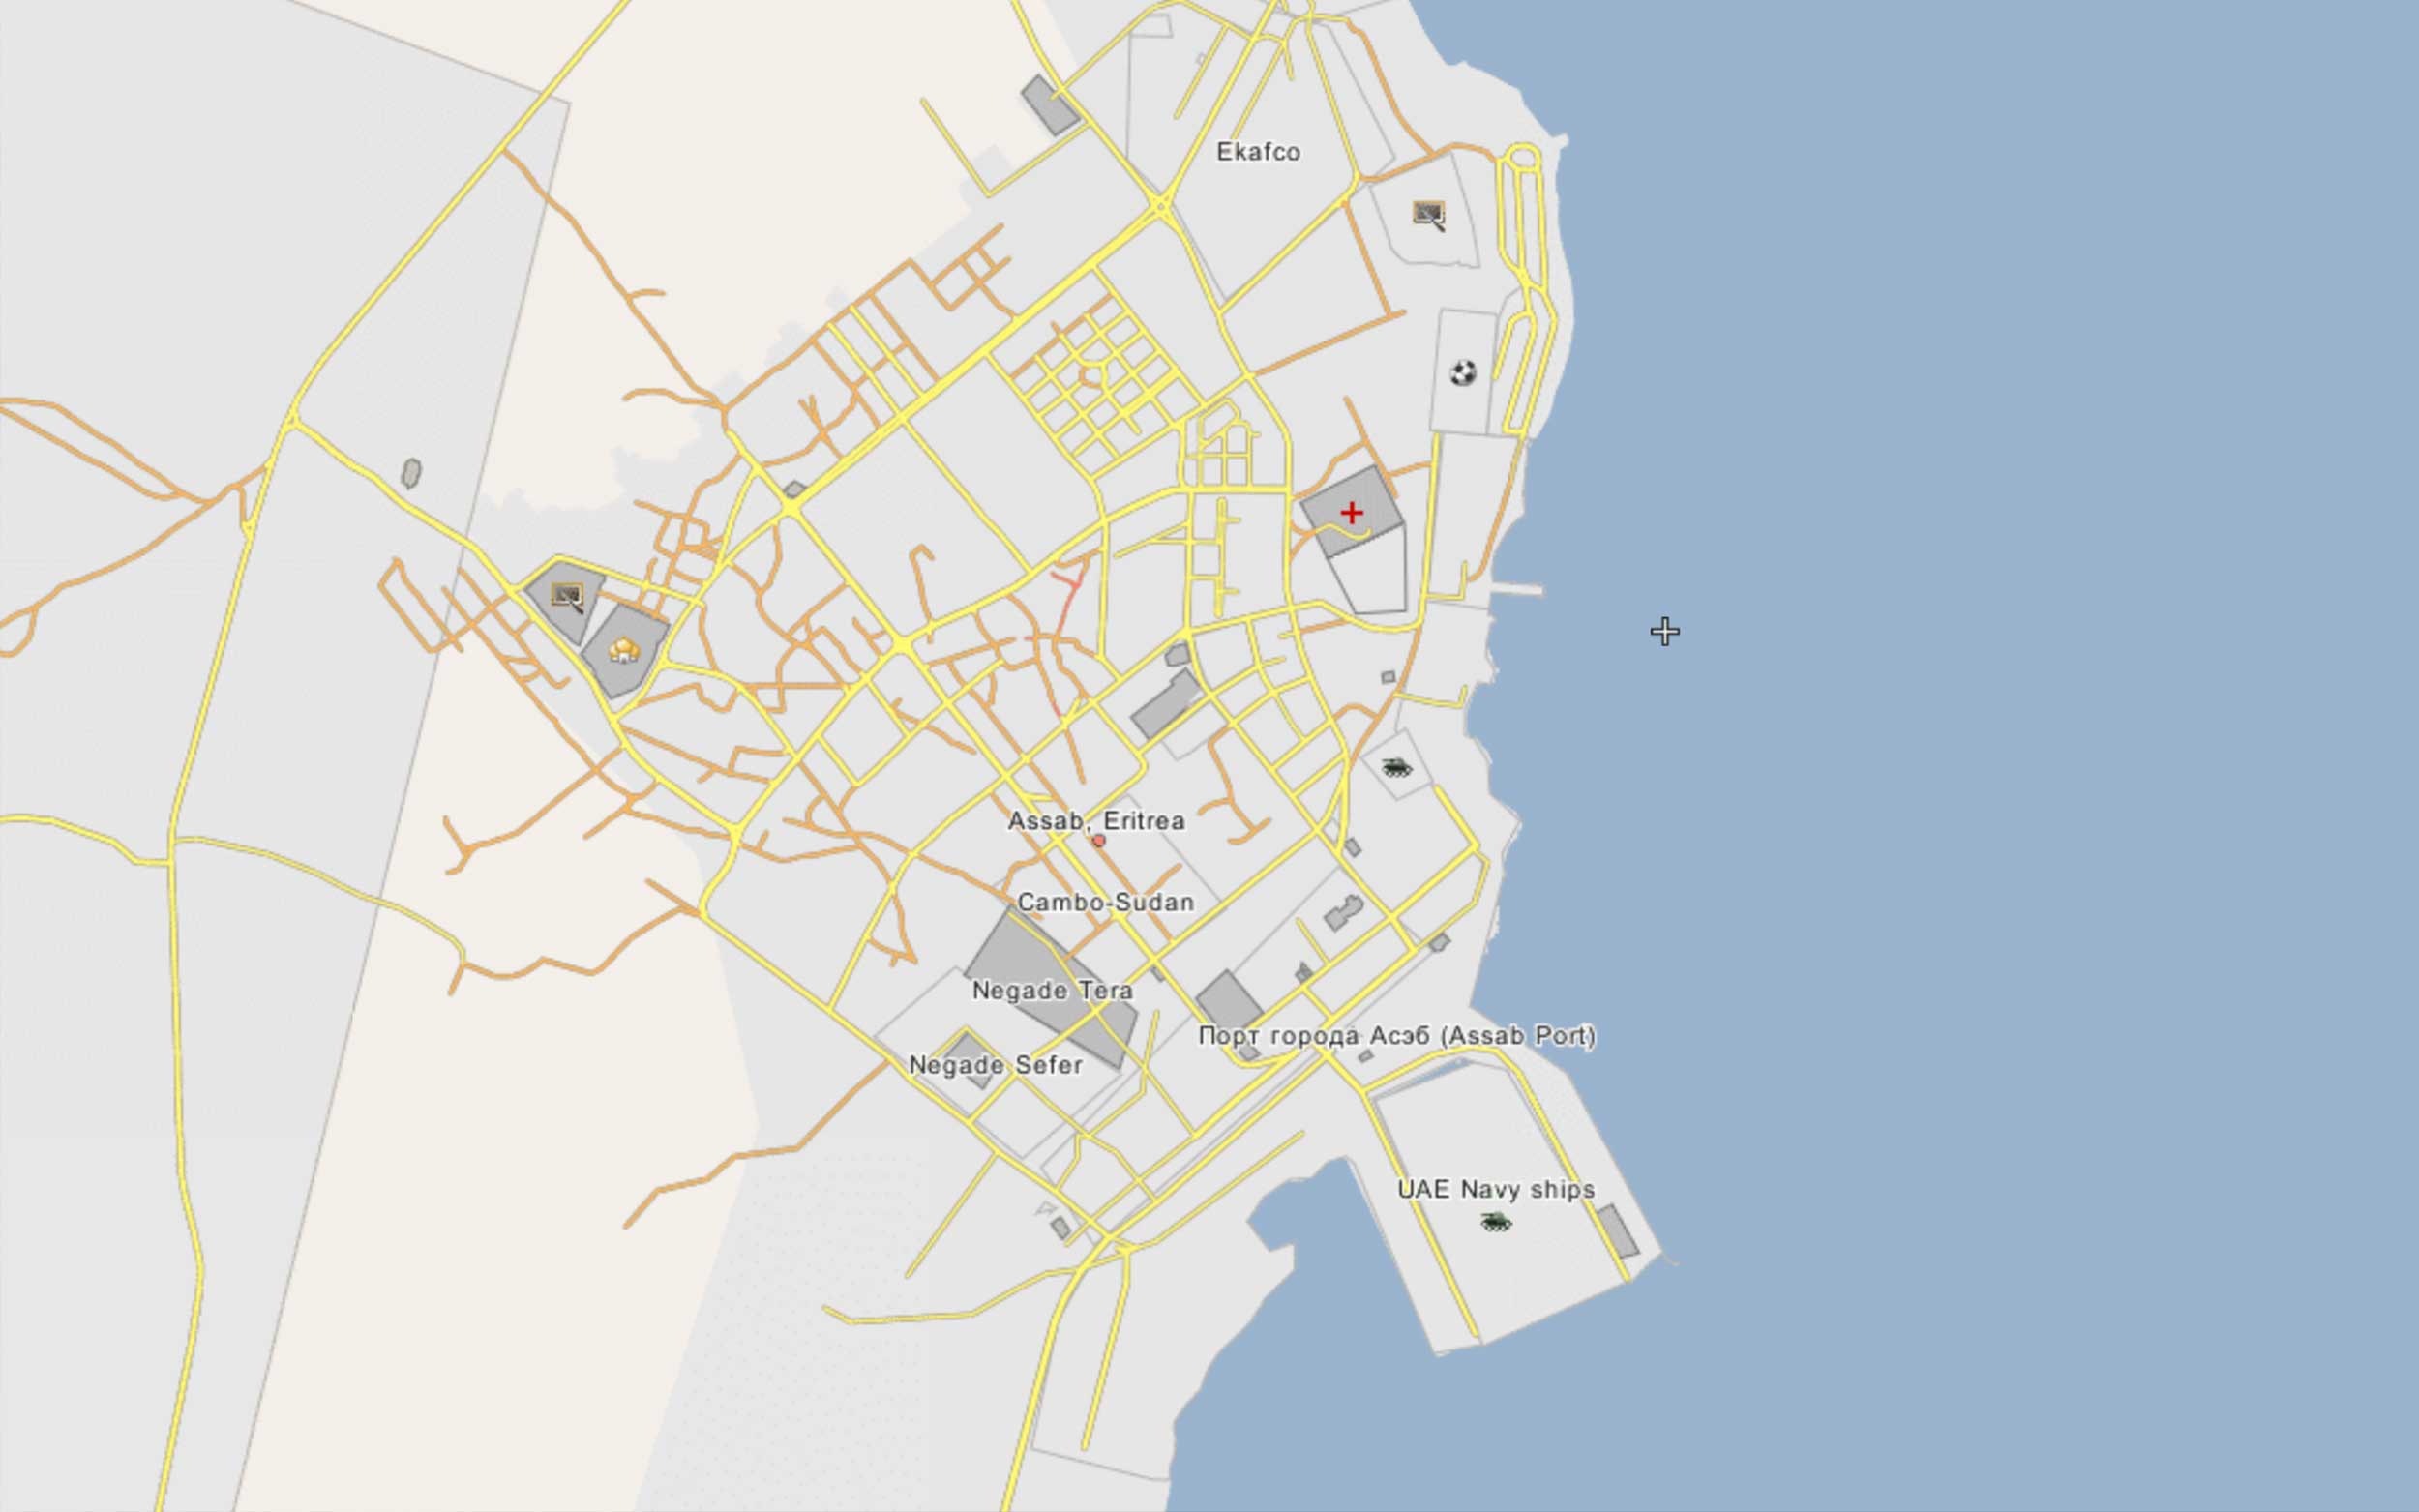 Arialah-OPV-assab-eritrea-geolocation-wikimapia